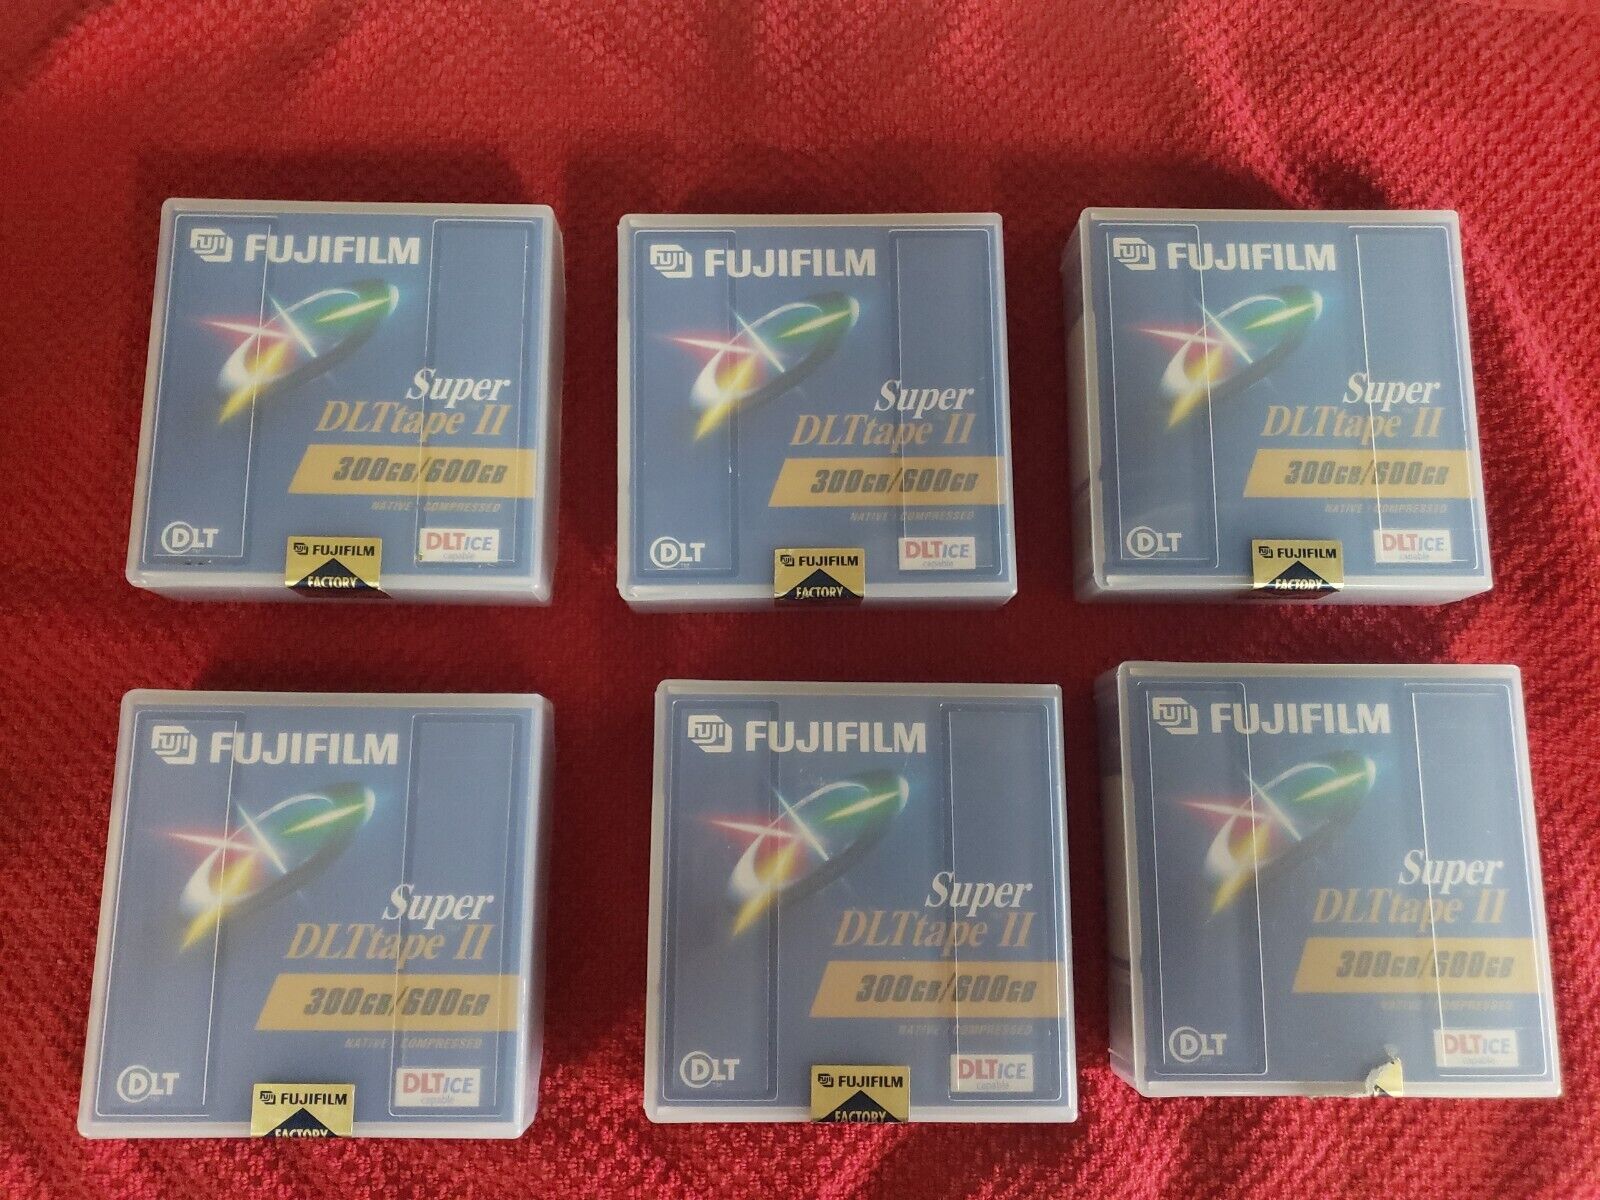 6 New Fujifilm WORM Capable 300GB/600GB  SDLTII  Super DLT Tape Cartridges   